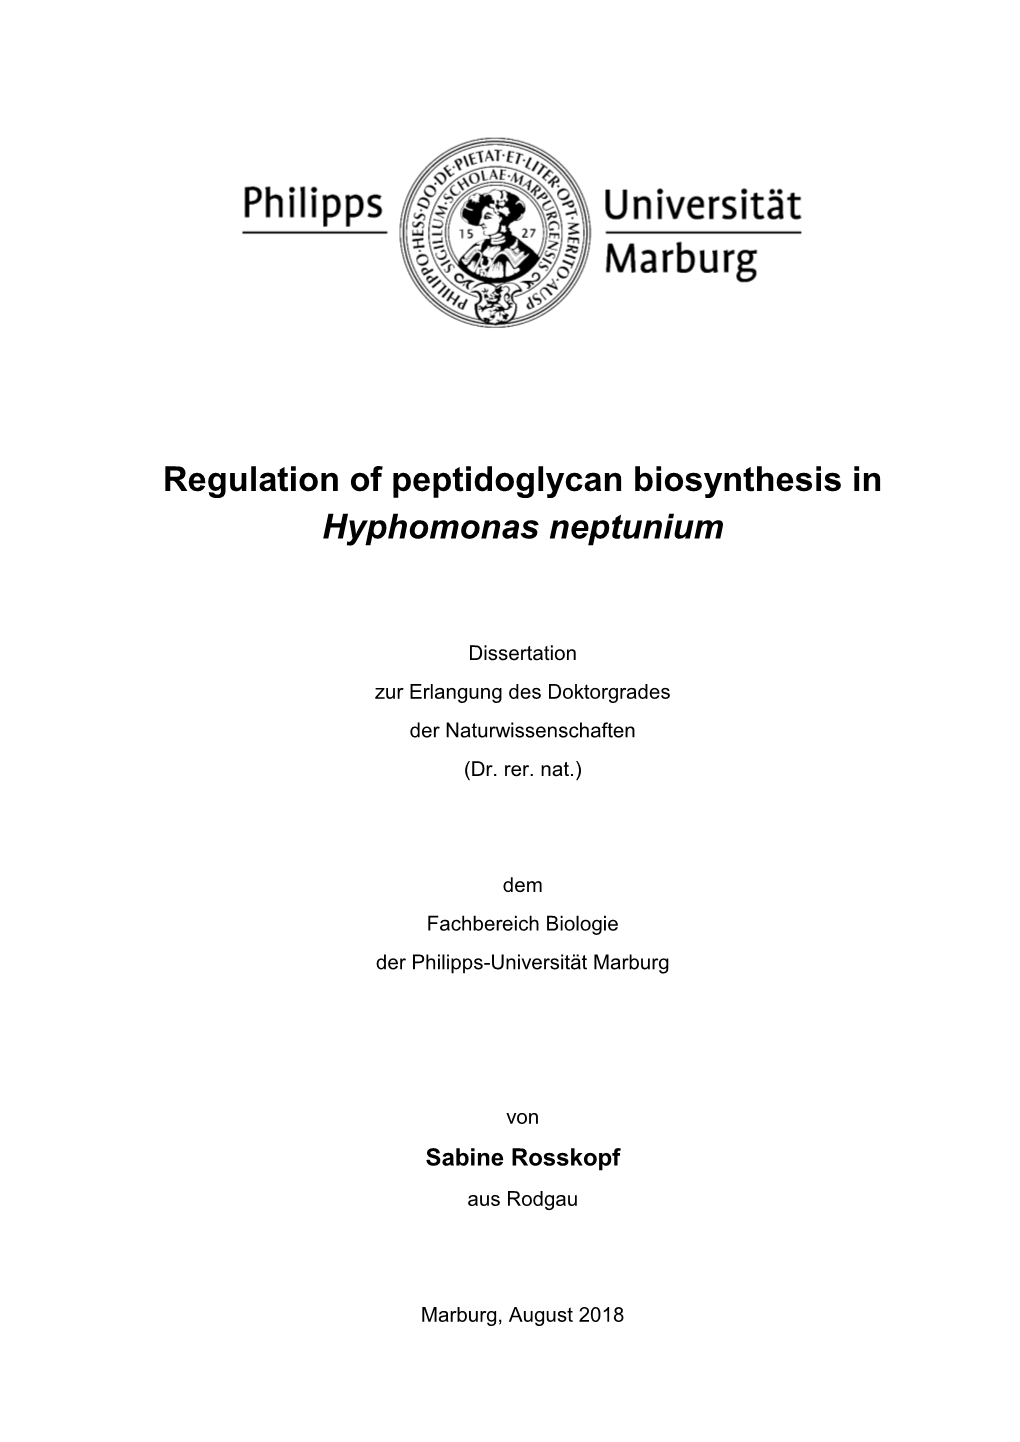 Regulation of Peptidoglycan Biosynthesis in Hyphomonas Neptunium